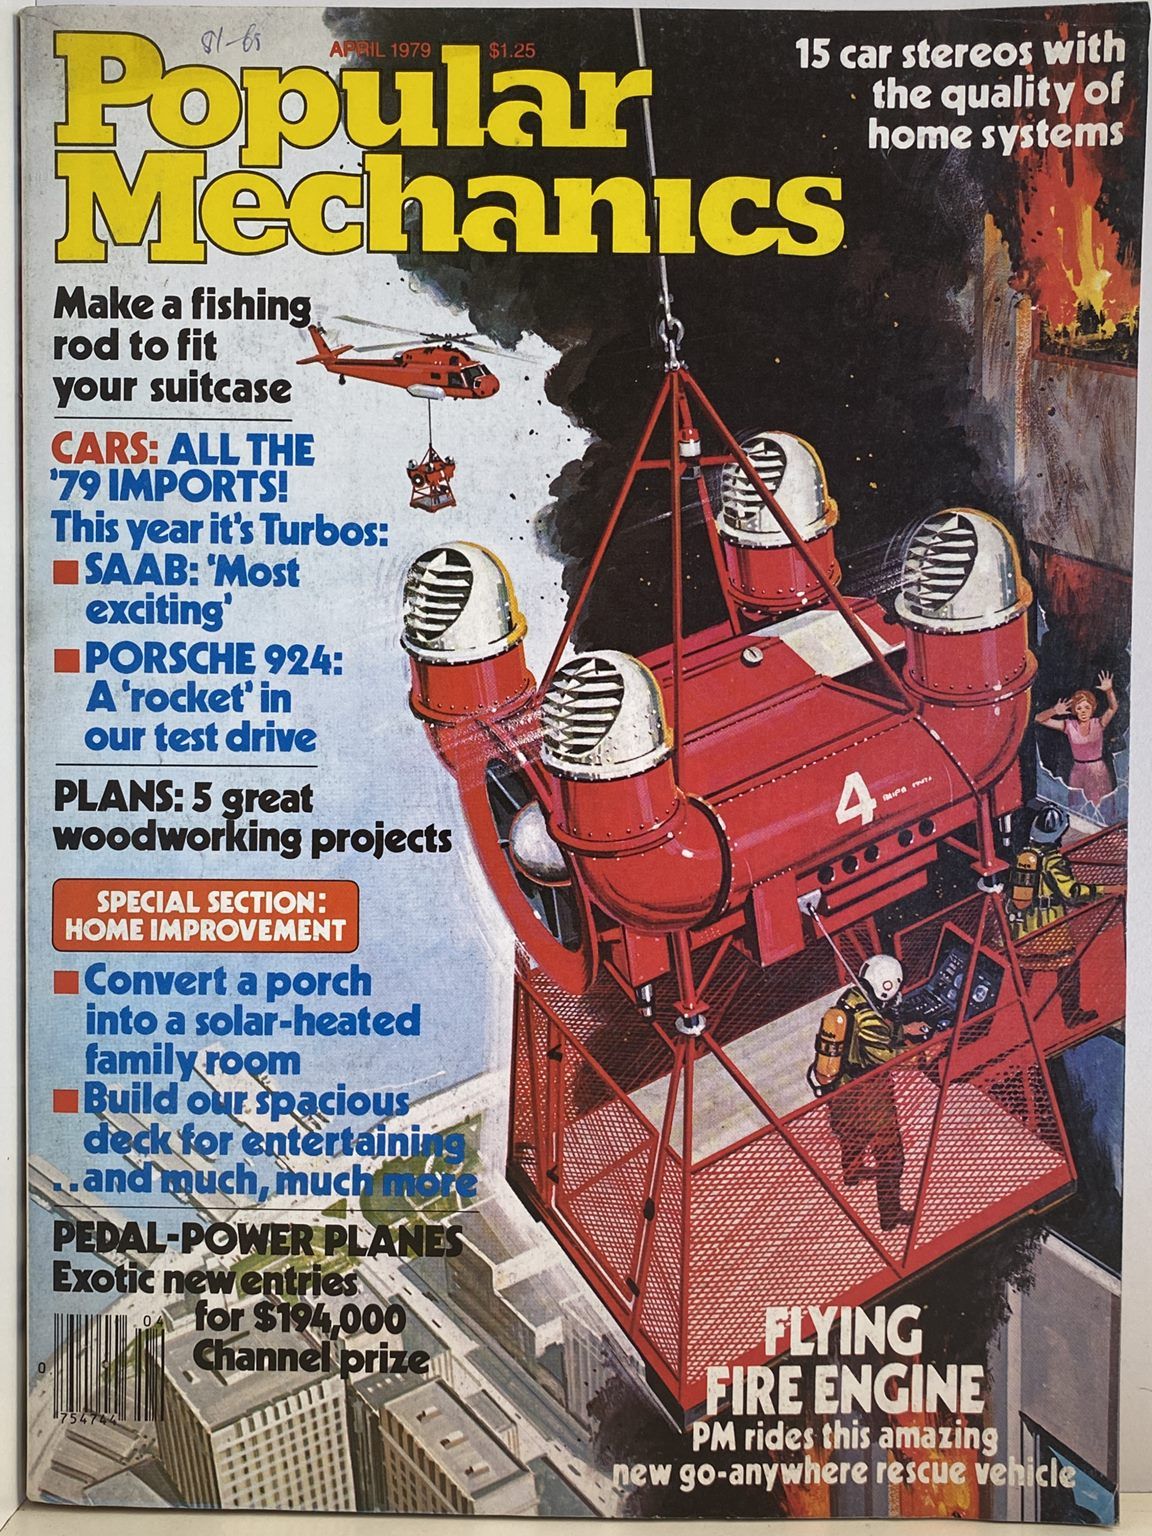 VINTAGE MAGAZINE: Popular Mechanics - Vol. 151, No. 4 - April 1979